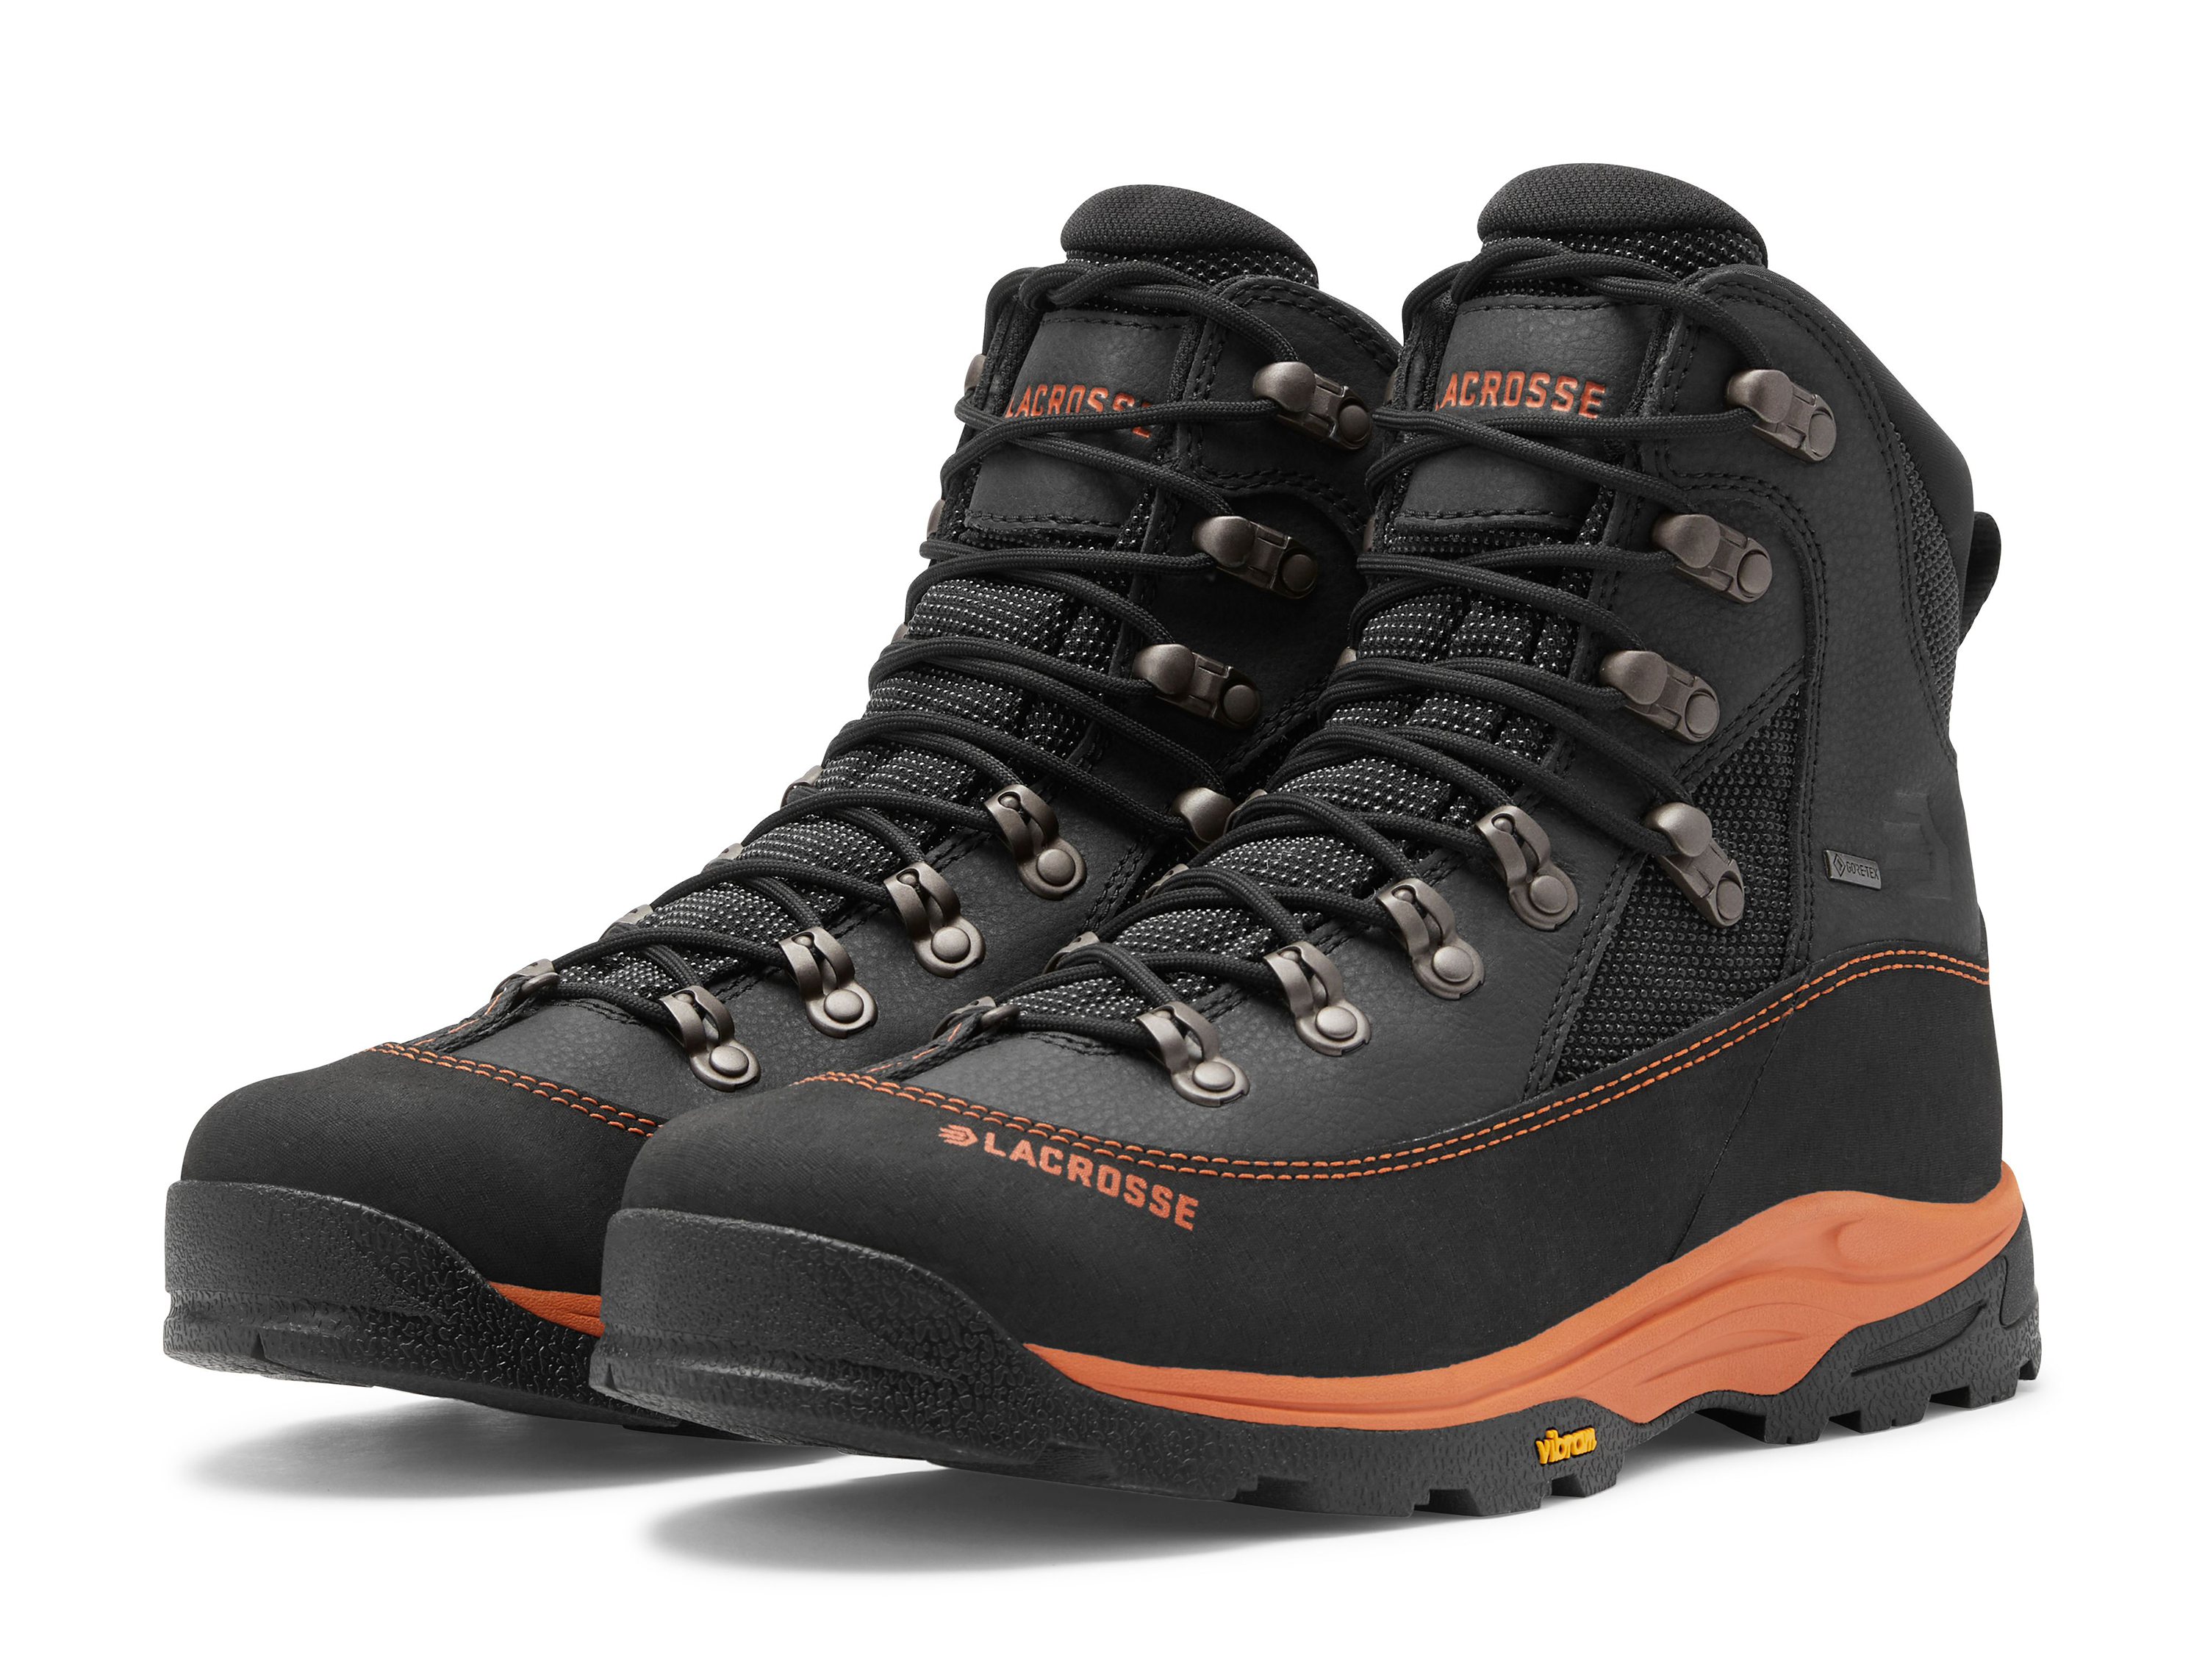 LaCrosse Ursa MS GORE-TEX Hunting Boots for Men - Gunmetal/Orange - 8.5M